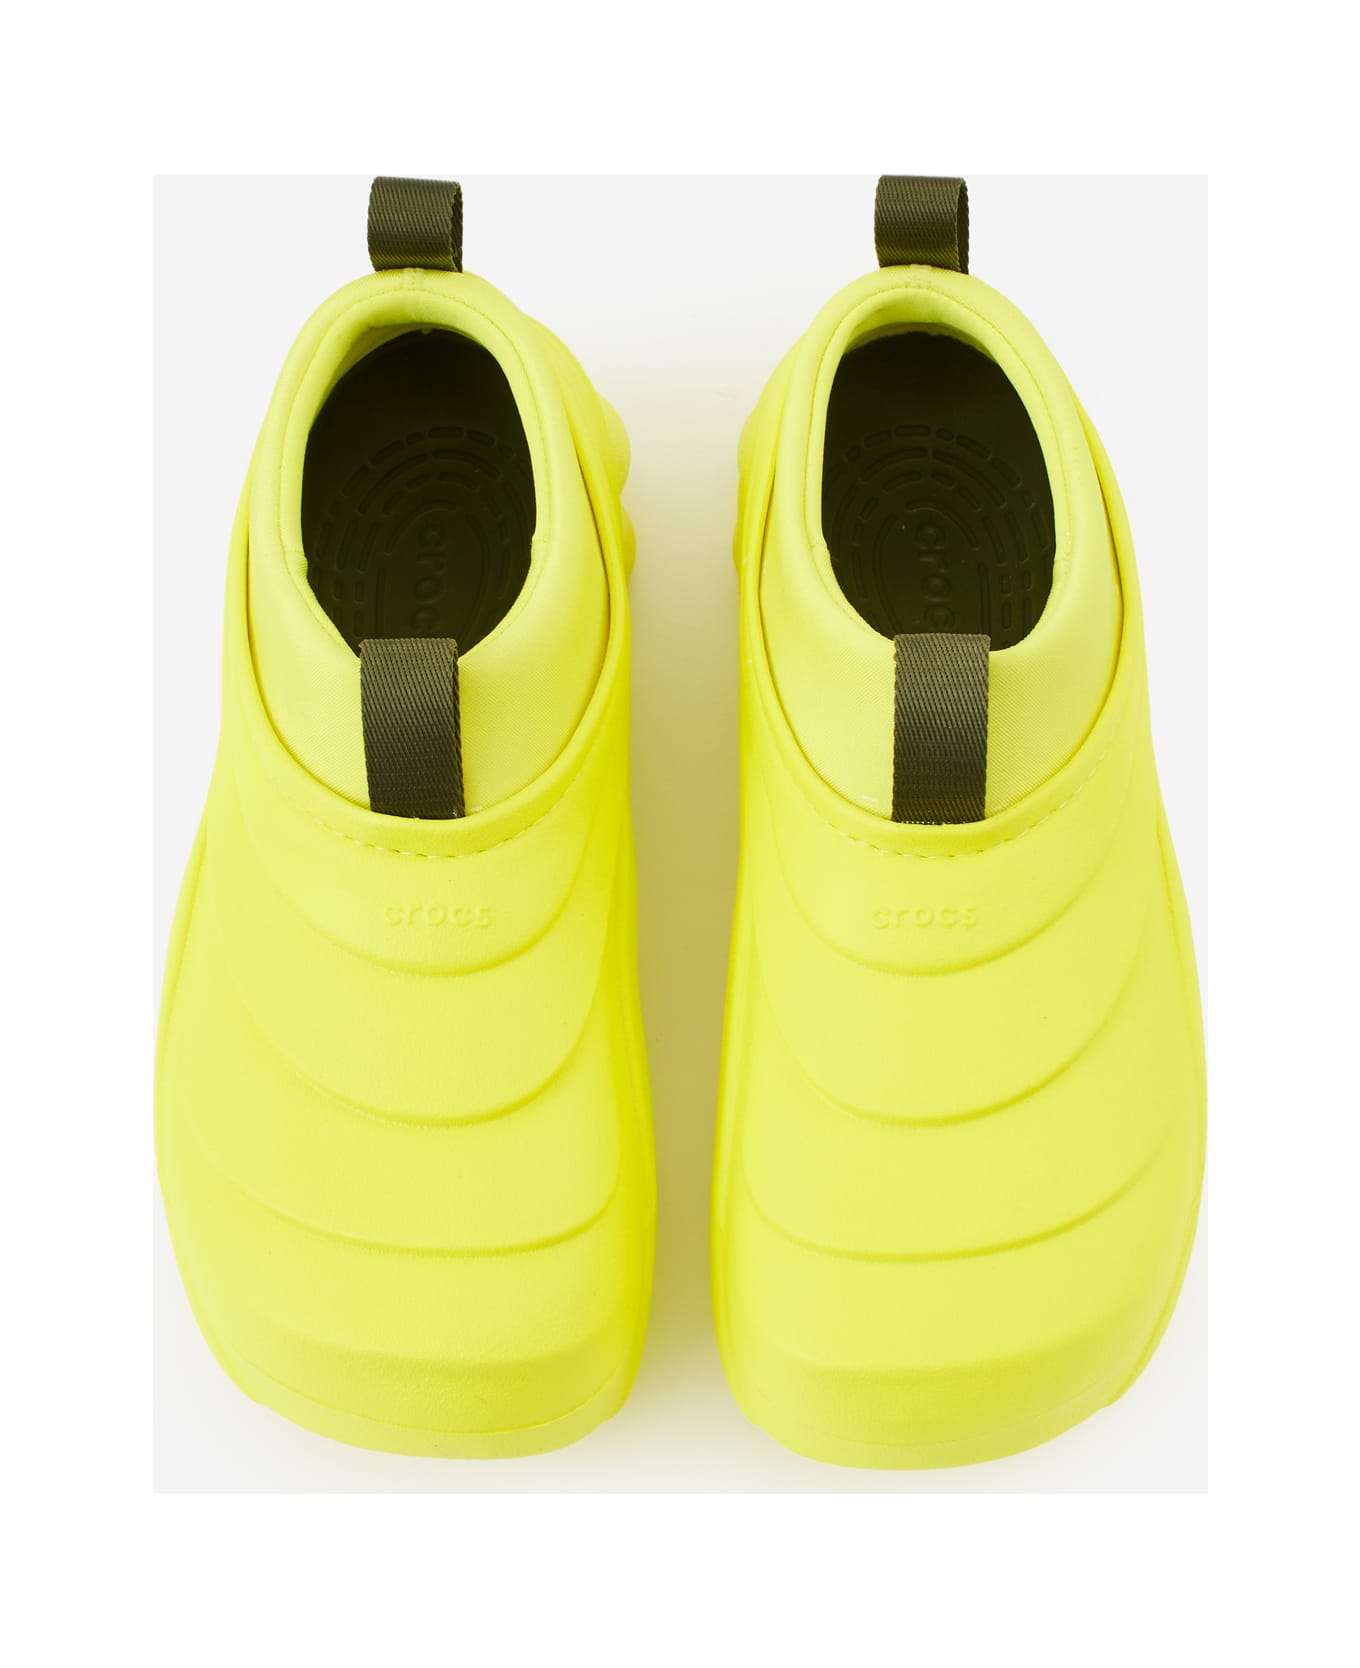 Crocs Echo Storm Shoes - yellow